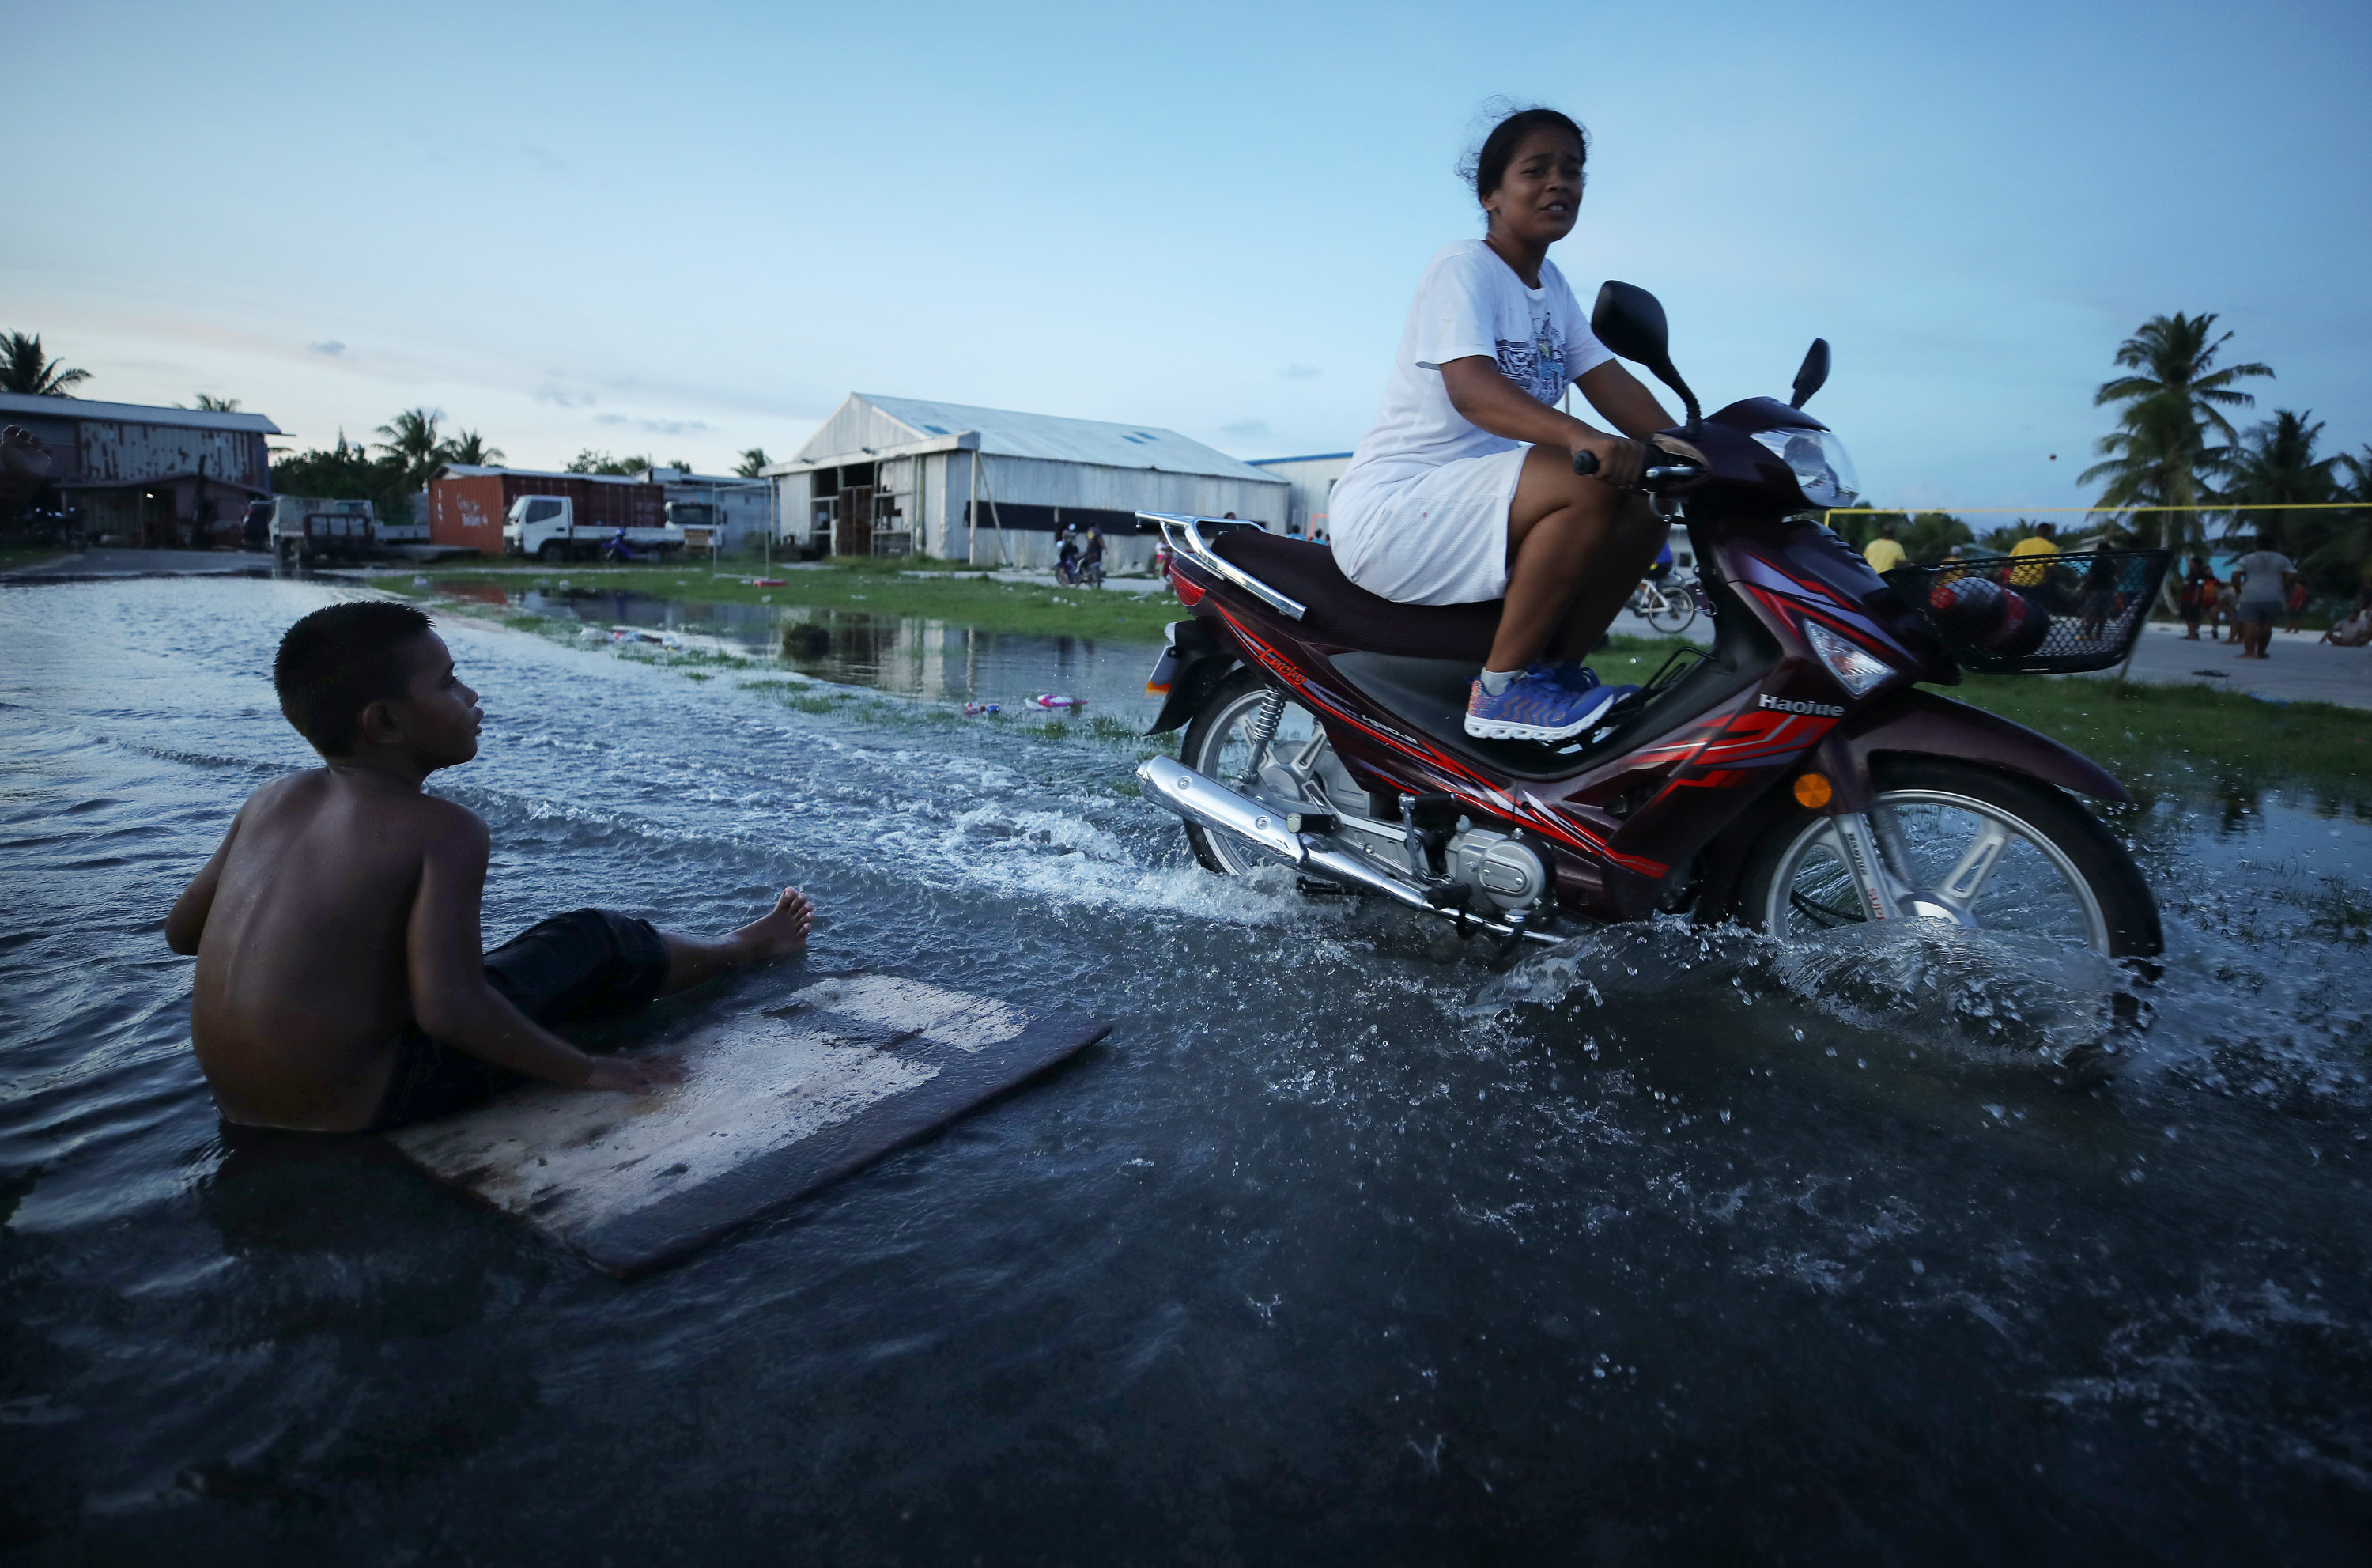 A woman rides a motorbike through flood water in Funafuti, Tuvalu